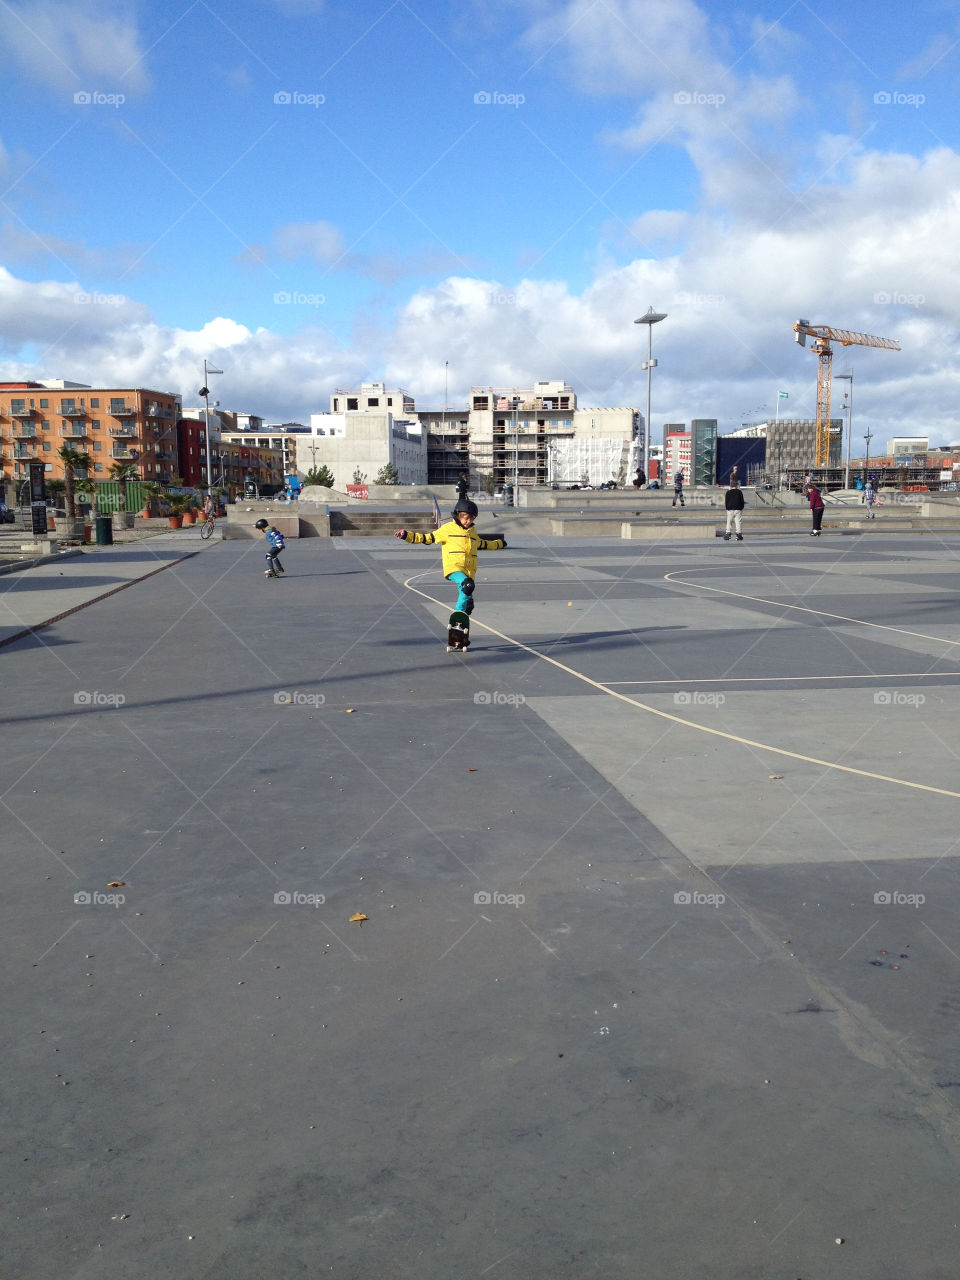 malmö italy learning skatepark by nataliabrynte